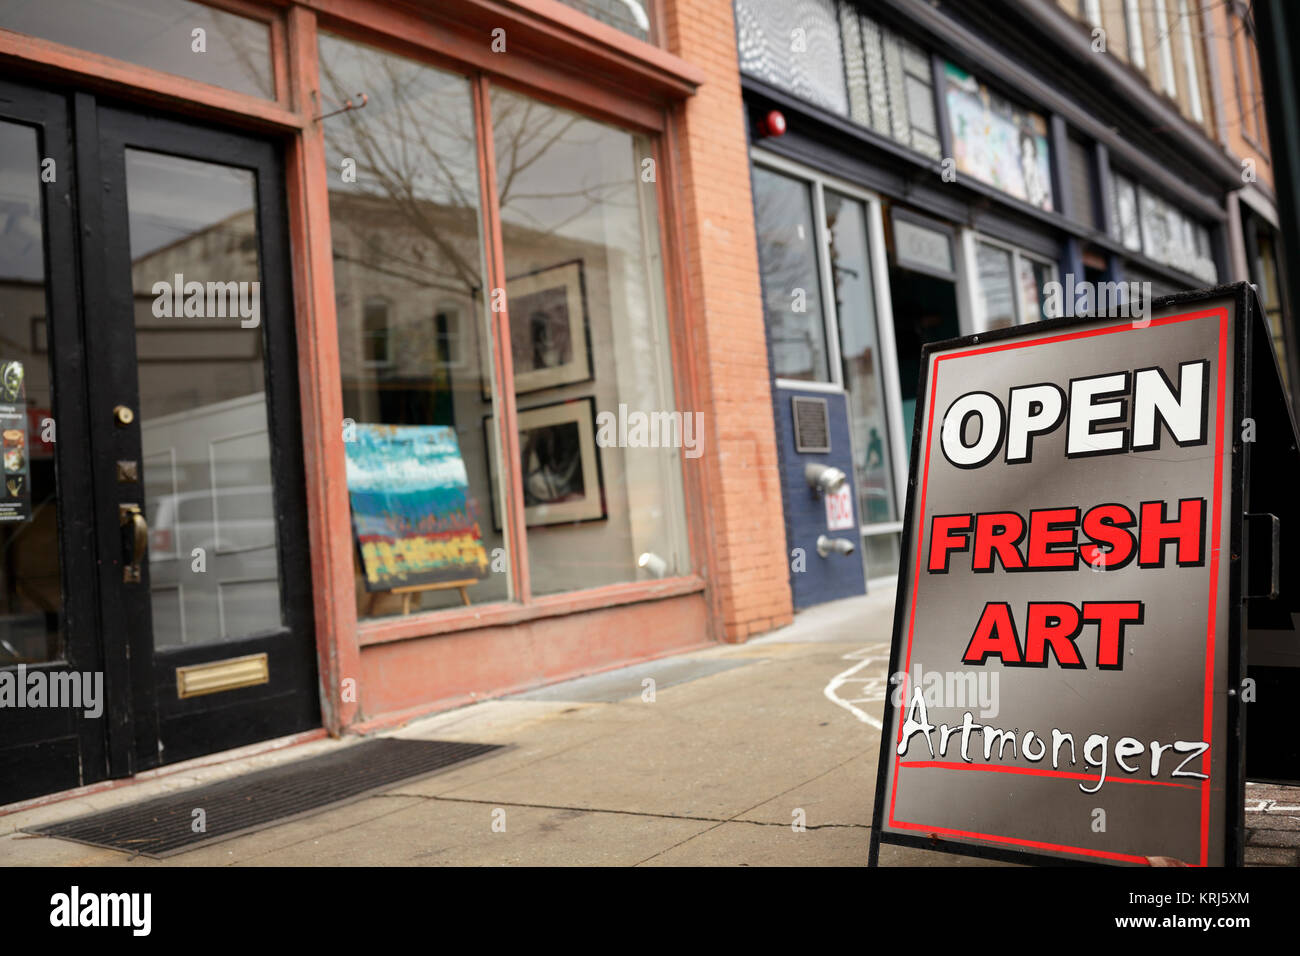 Fresh Art sign, Artmongerz Gallery, Greensboro, North Carolina, USA Stock Photo